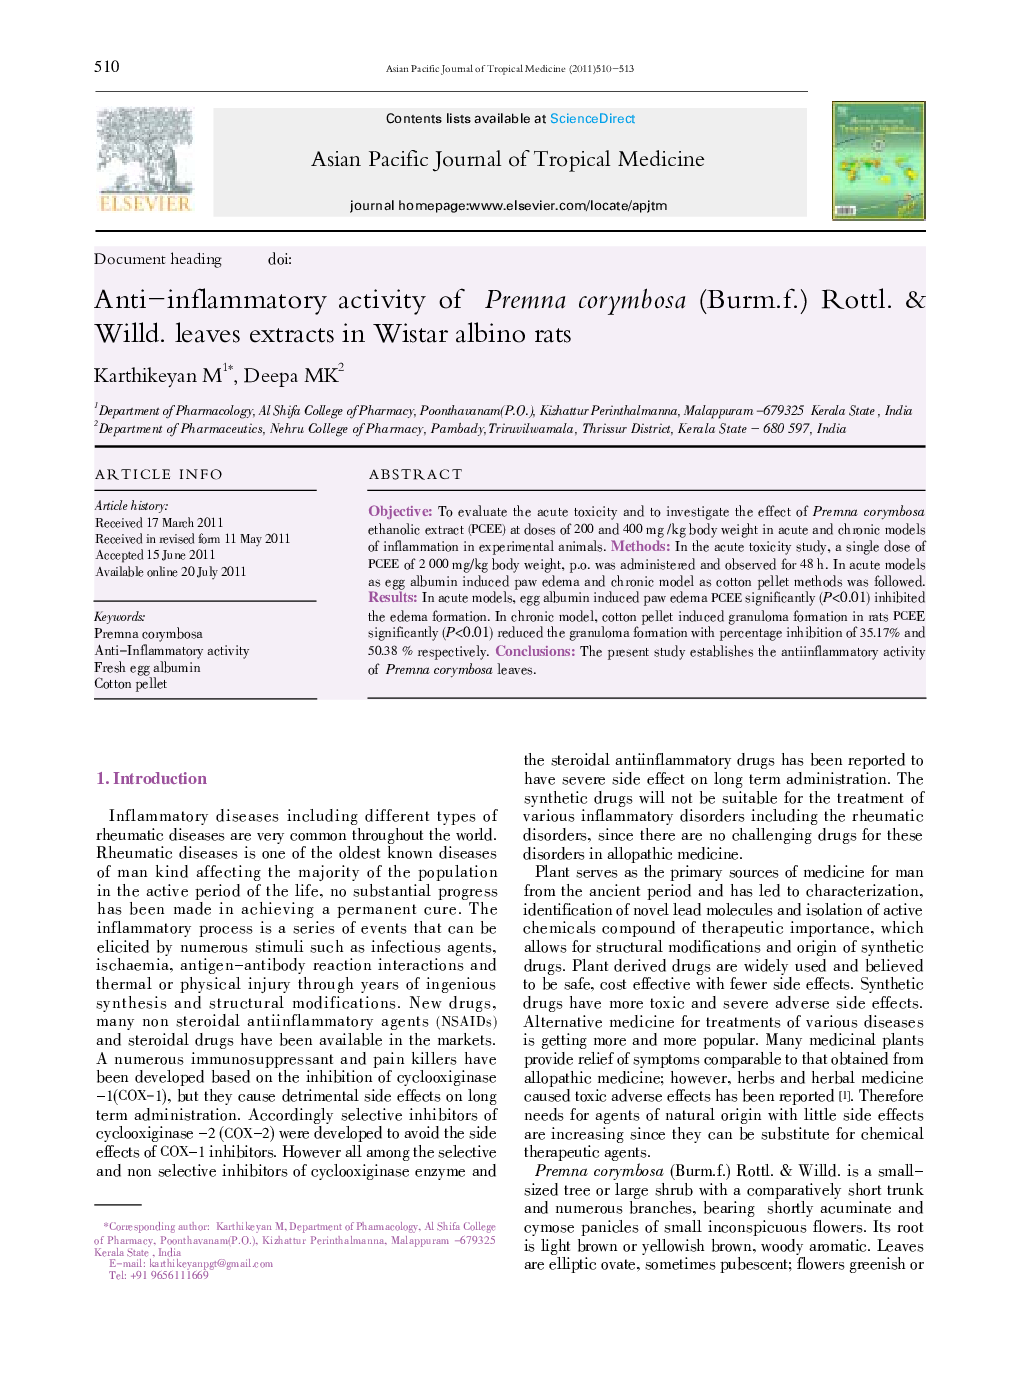 Anti–inflammatory activity of Premna corymbosa (Burm.f.) Rottl. & Willd. leaves extracts in Wistar albino rats 